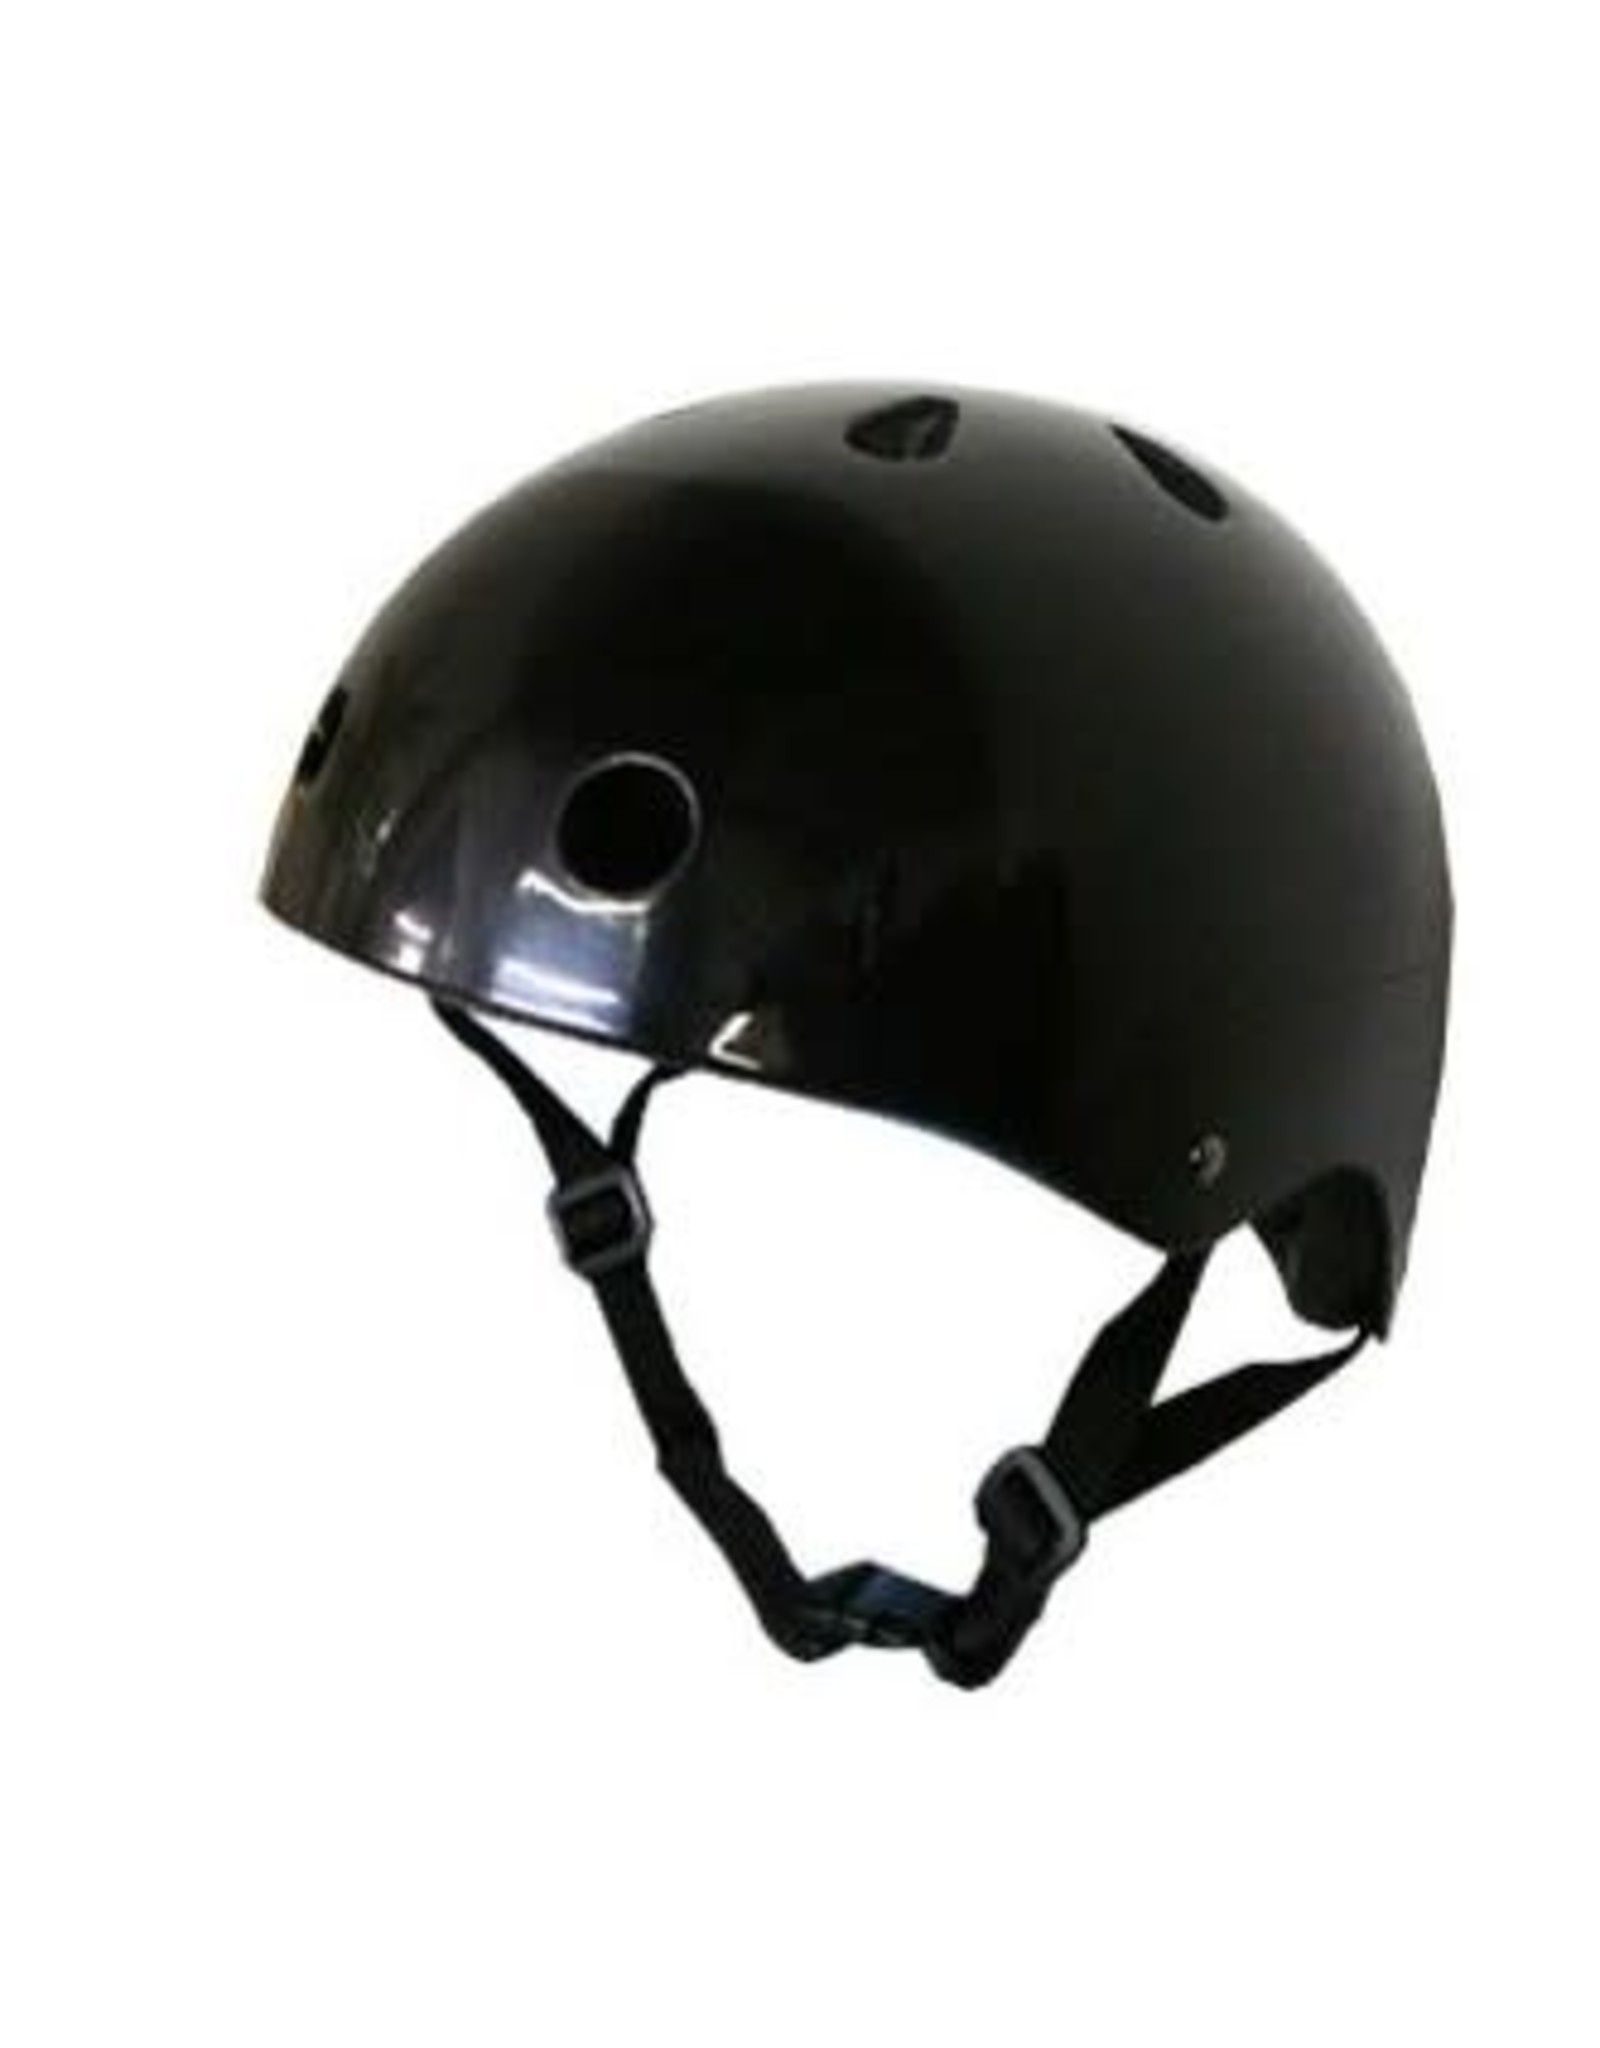 Helmets R Us Helmet - XL